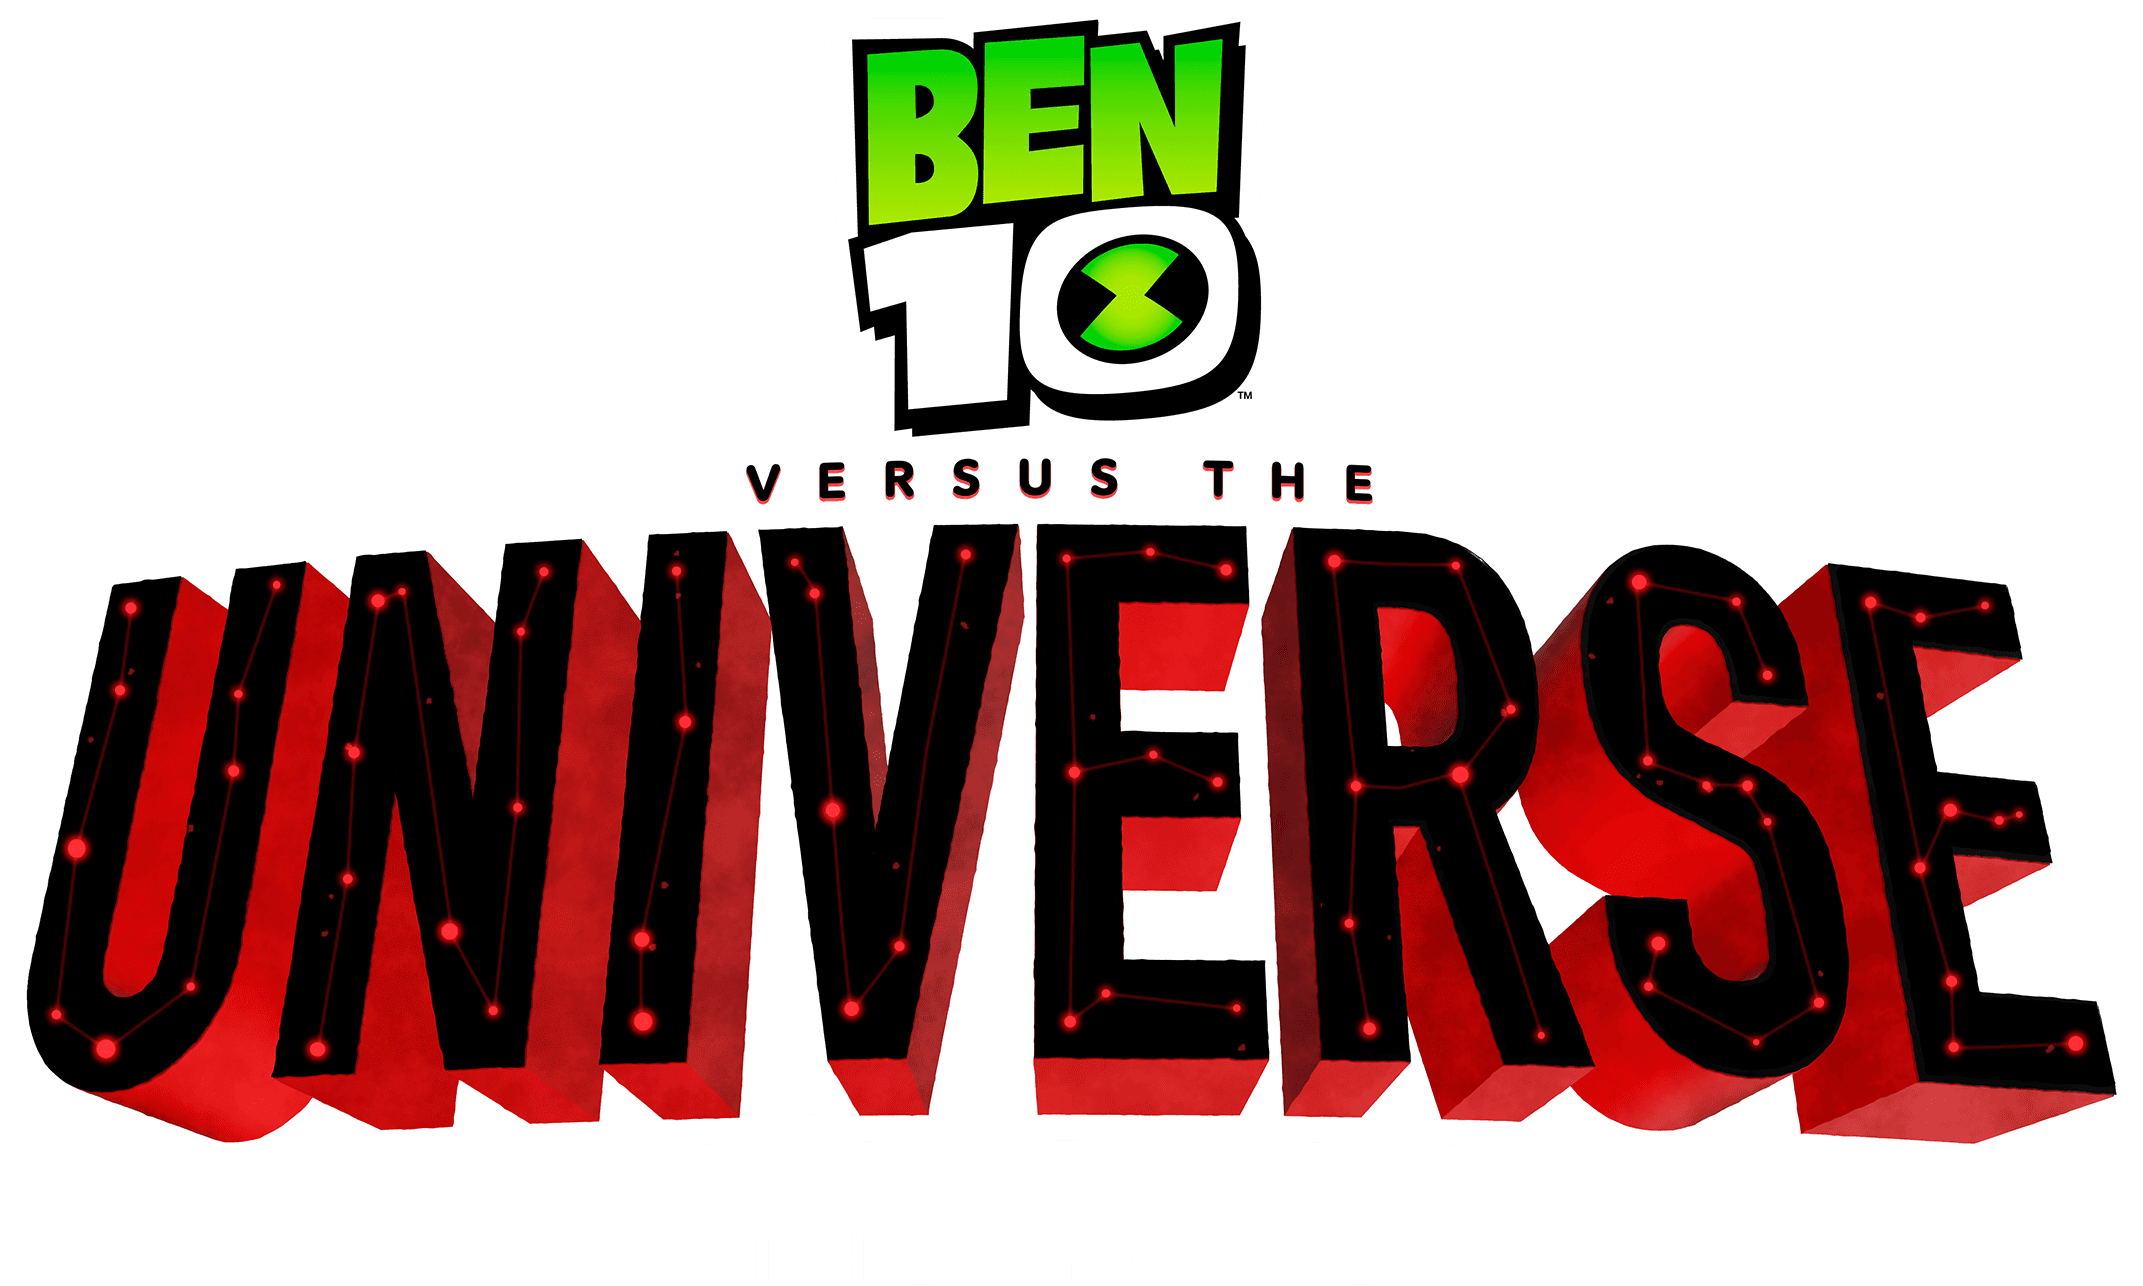 Ben 10 Versus the Universe: The Movie logo